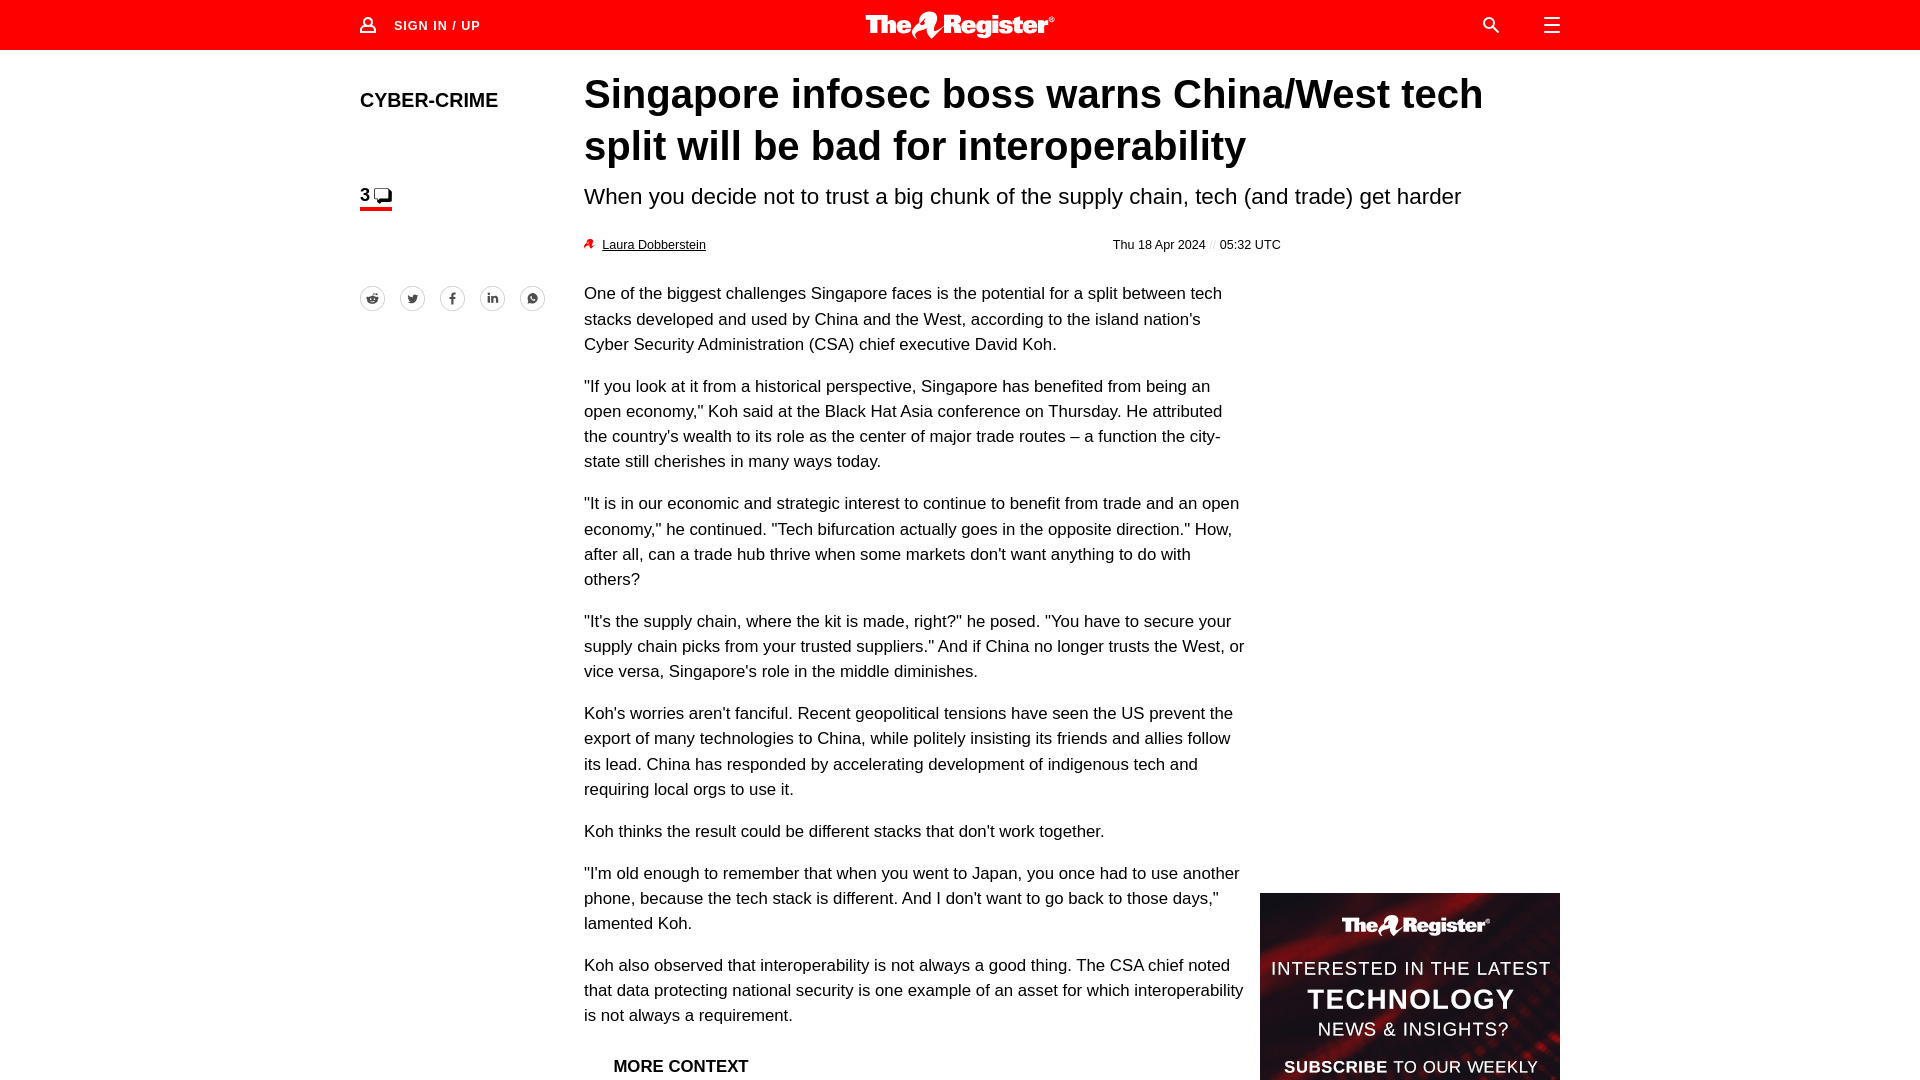 Singapore infosec boss: splinternet hinders interoperability • The Register